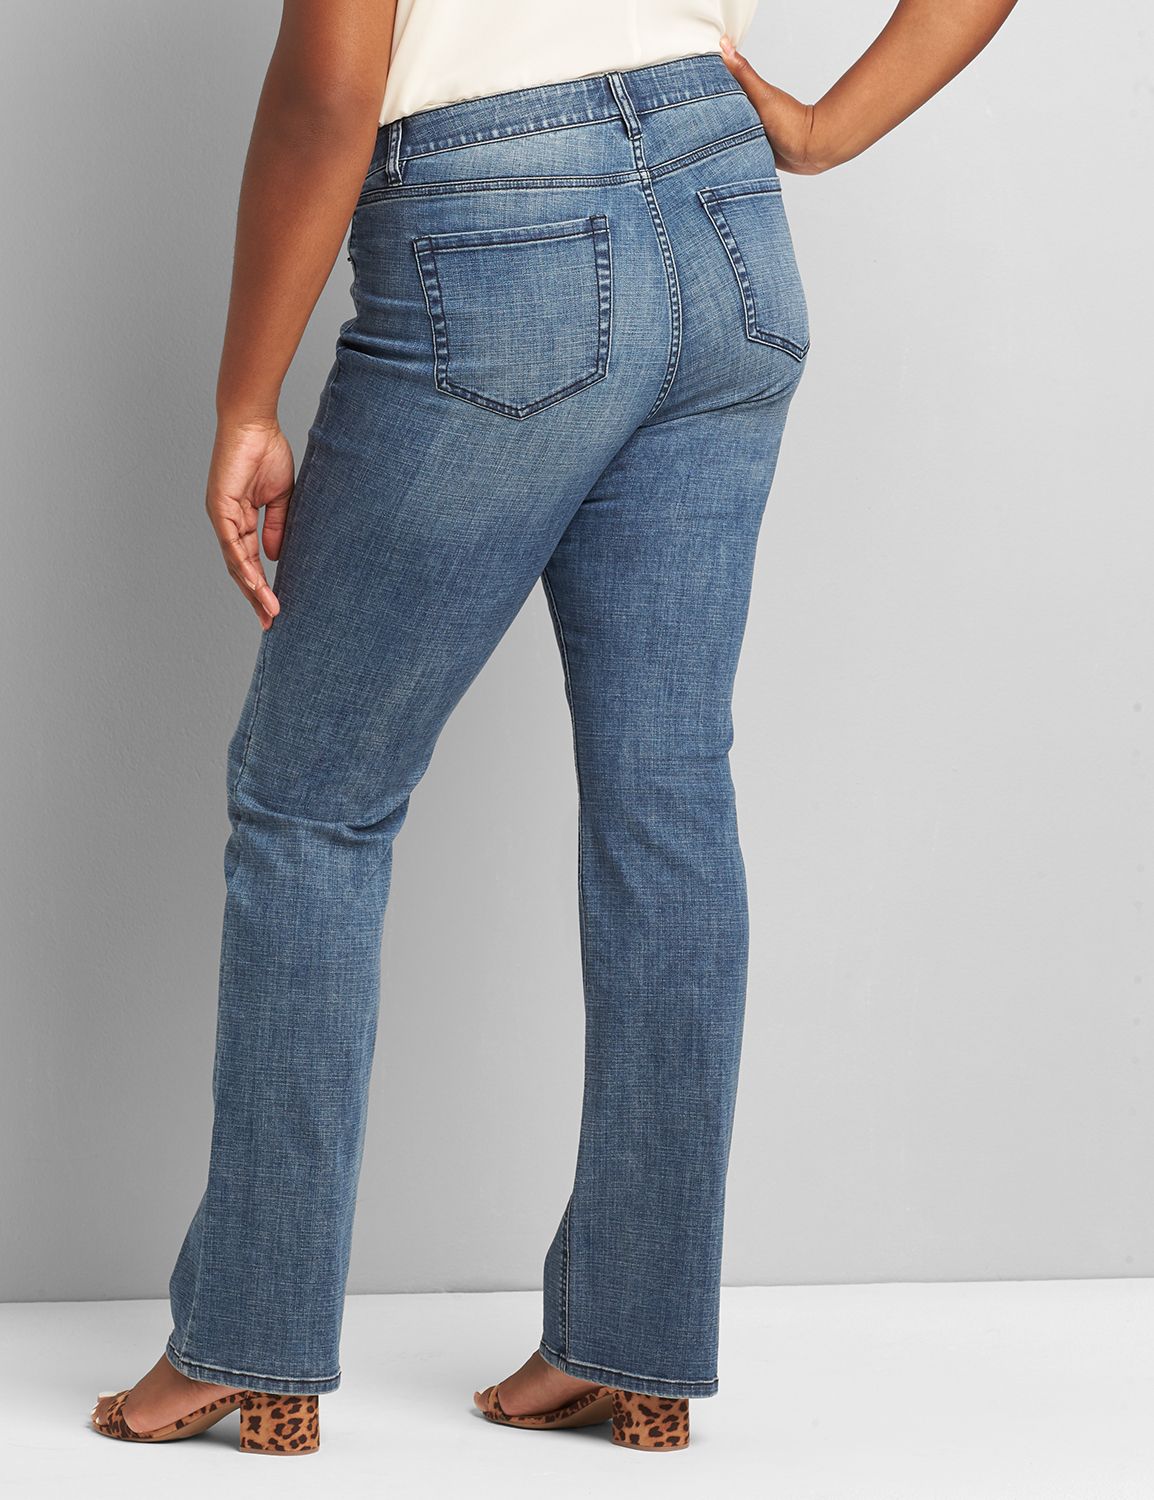 venezia jeans size chart